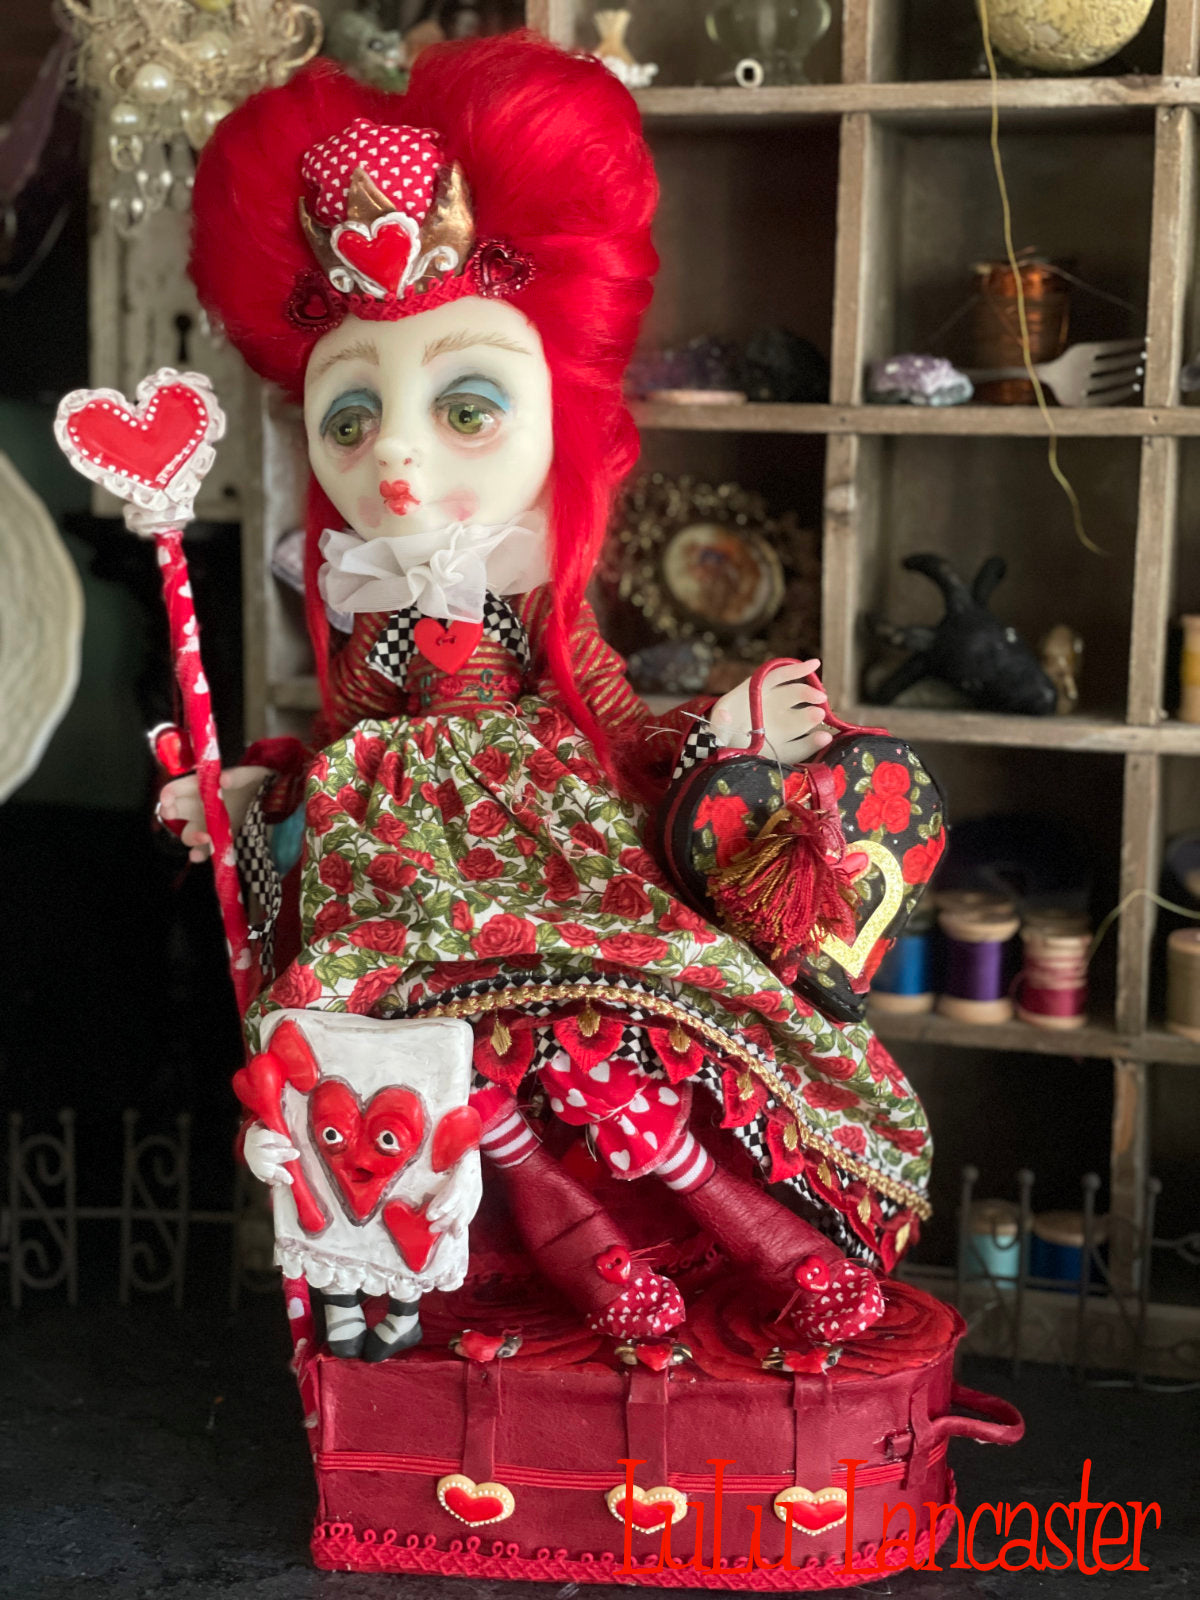 Traveling Queen Of Hearts Original LuLu Lancaster Art Doll